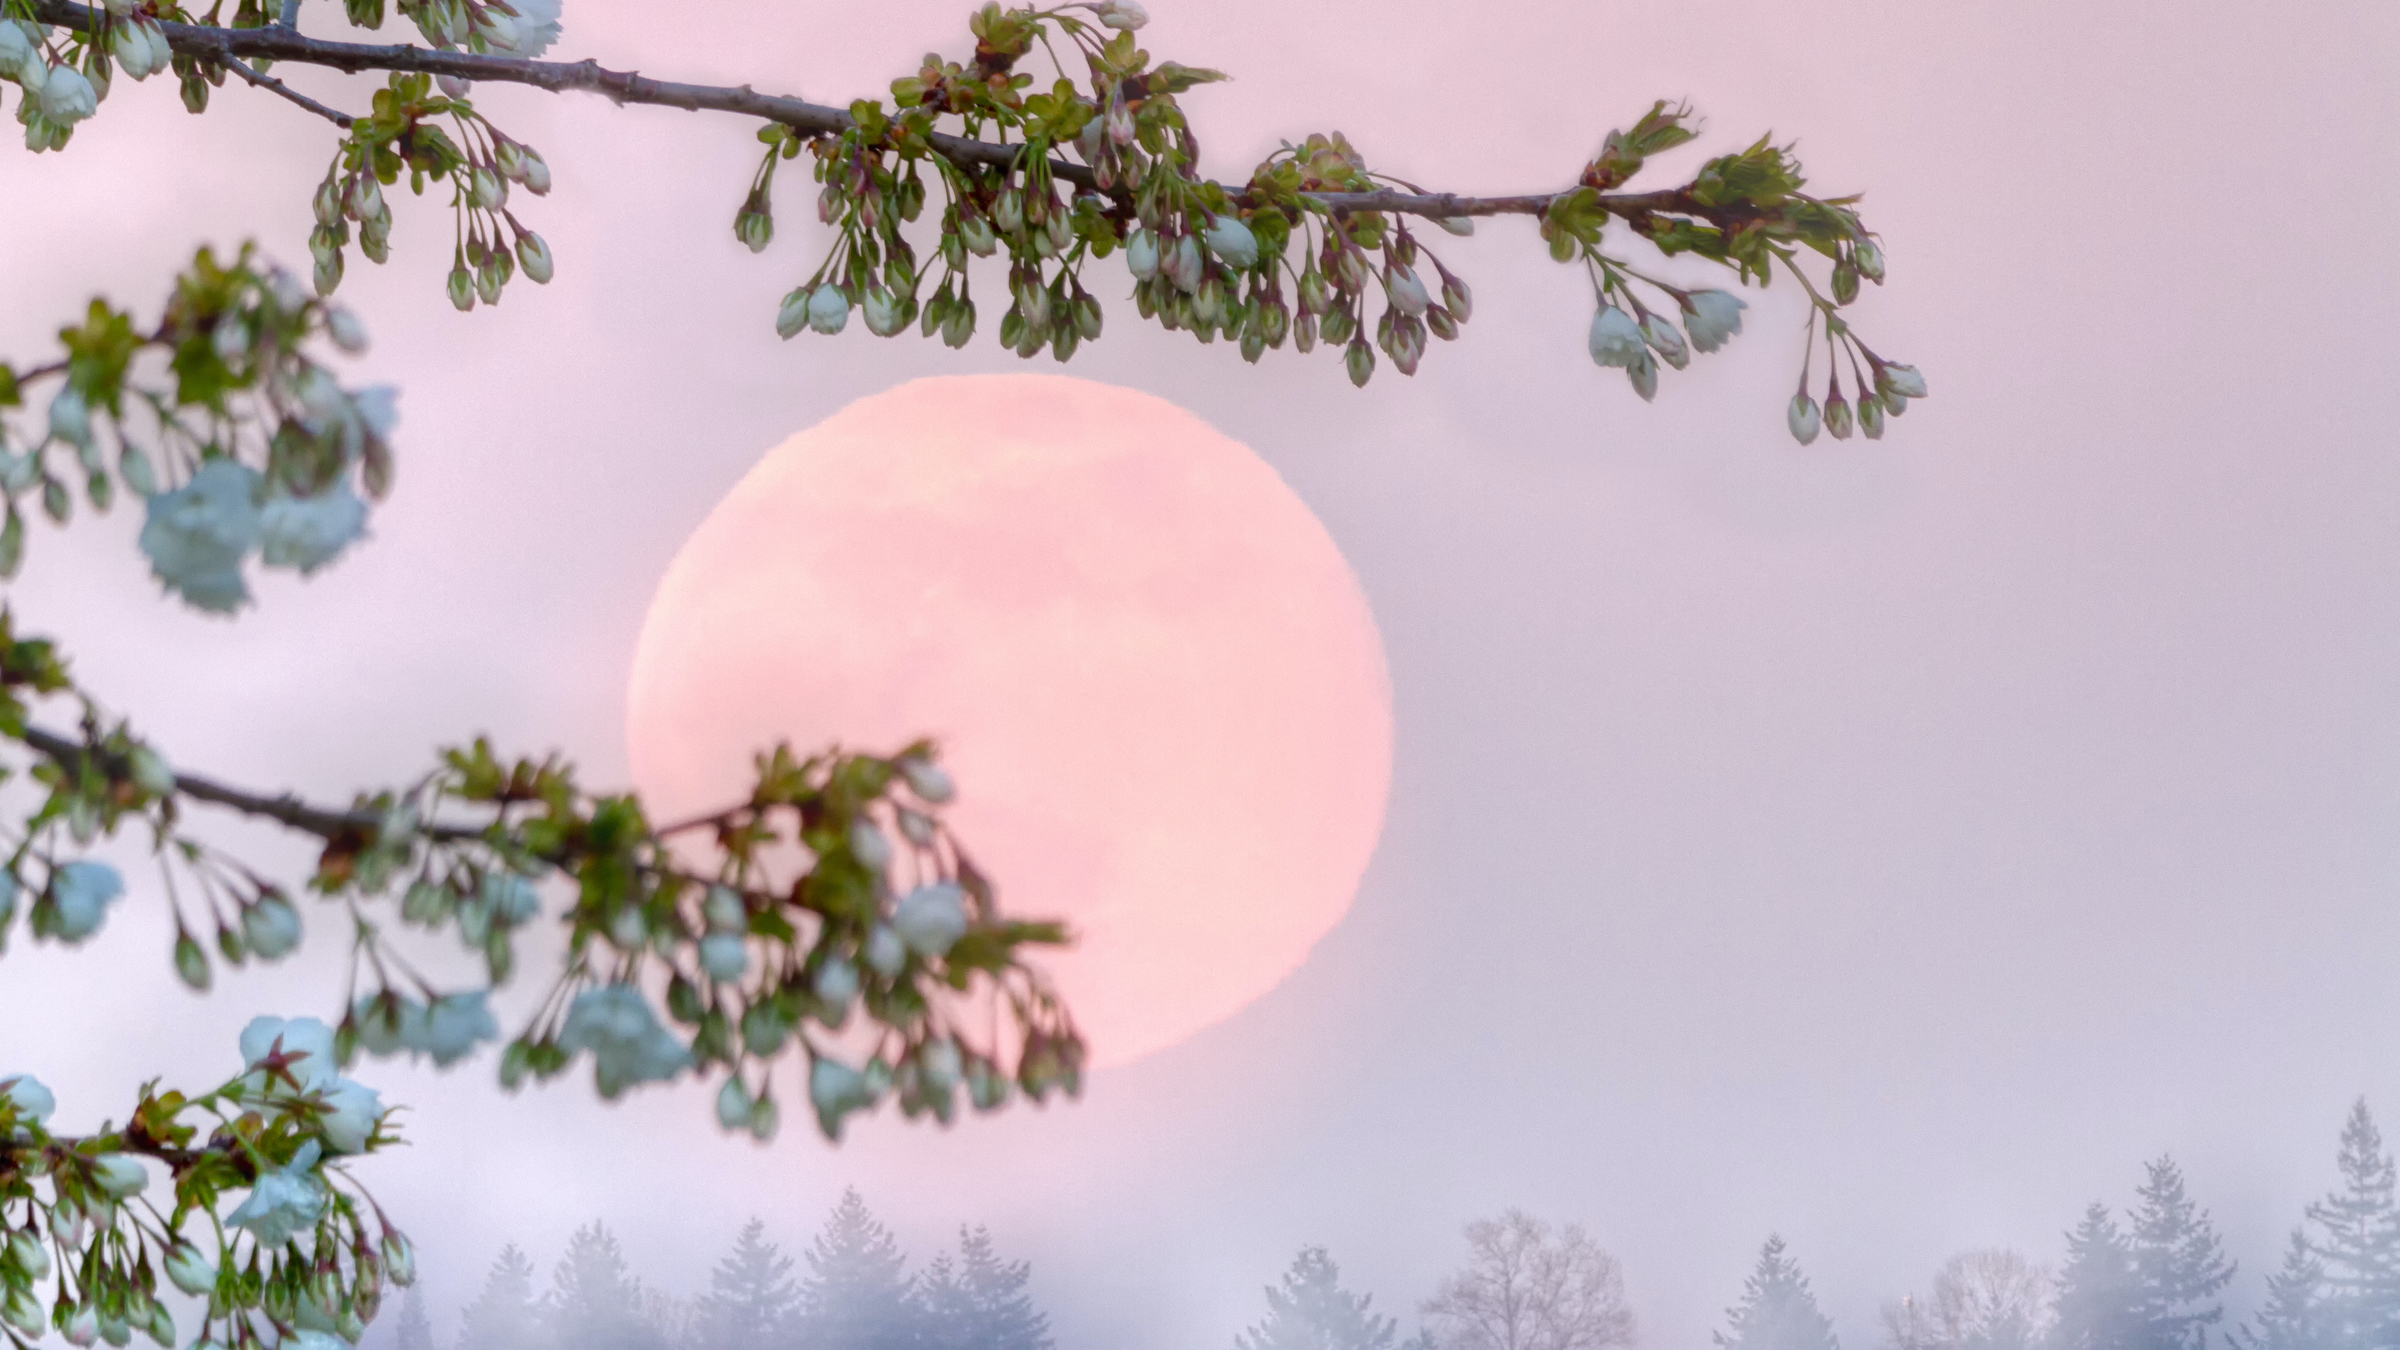 Admire the amazing natural phenomenon 'pink moon' tonight